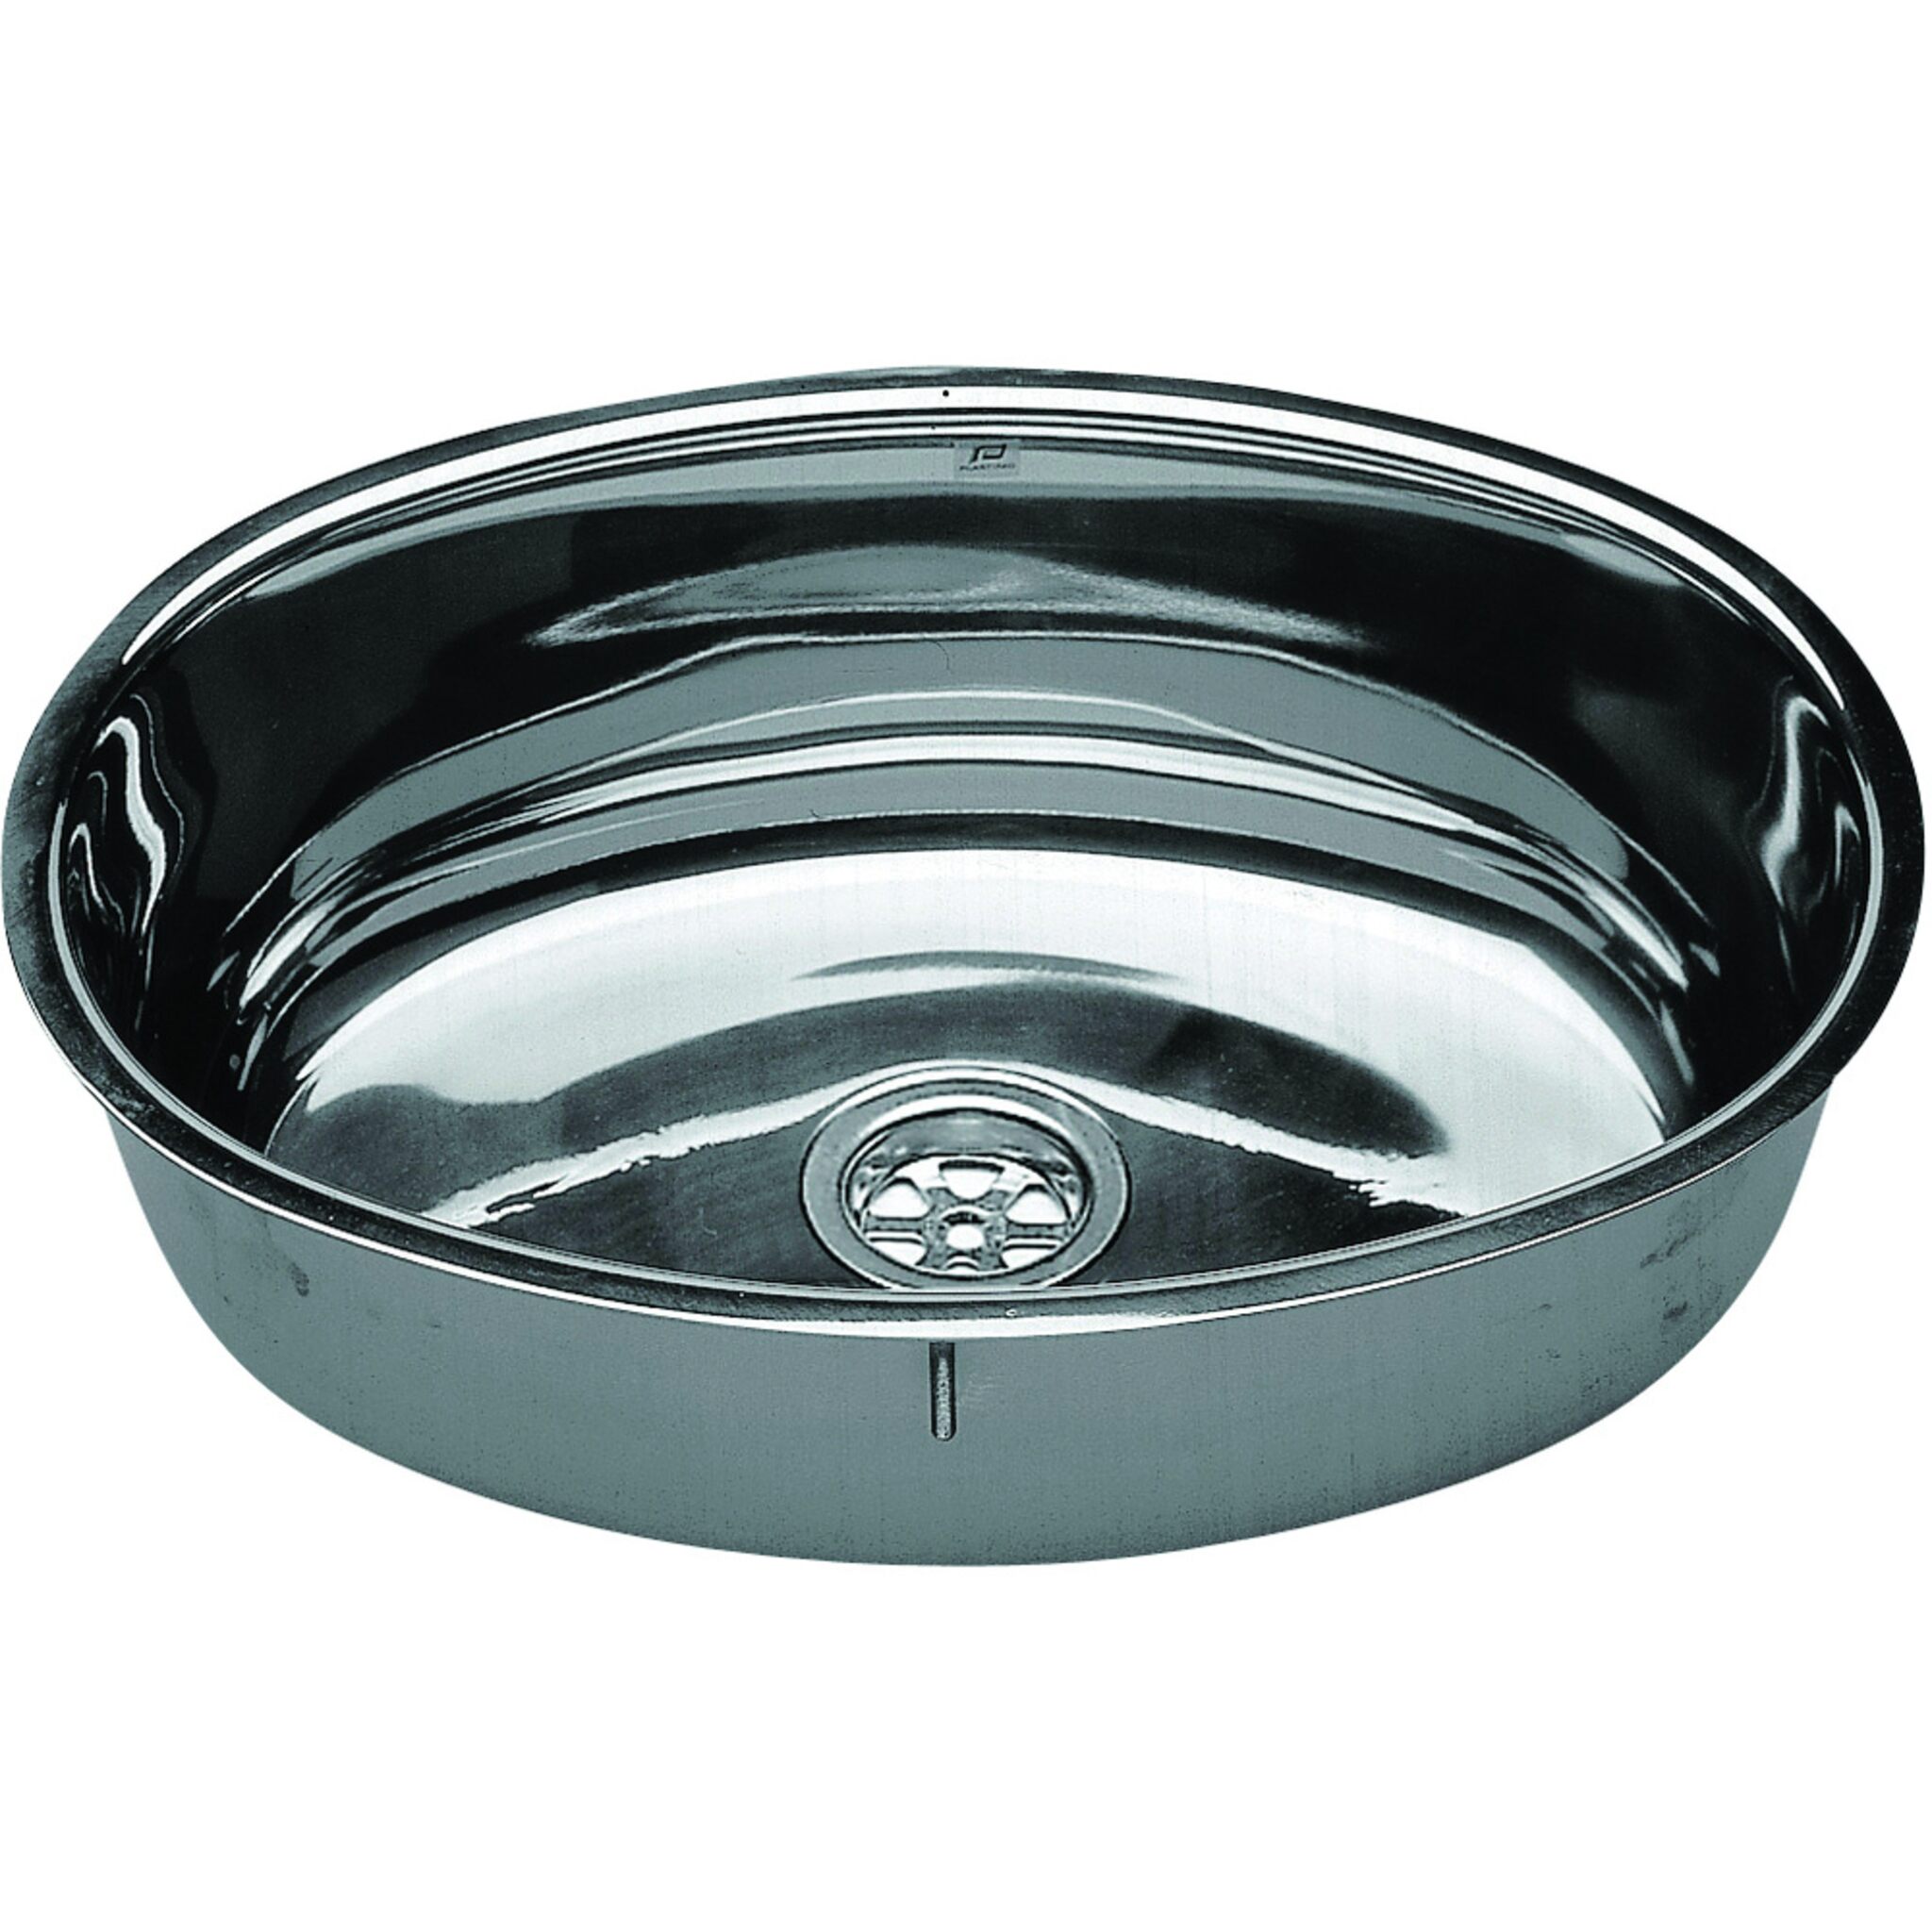 Plastimo stainless steel sink oval